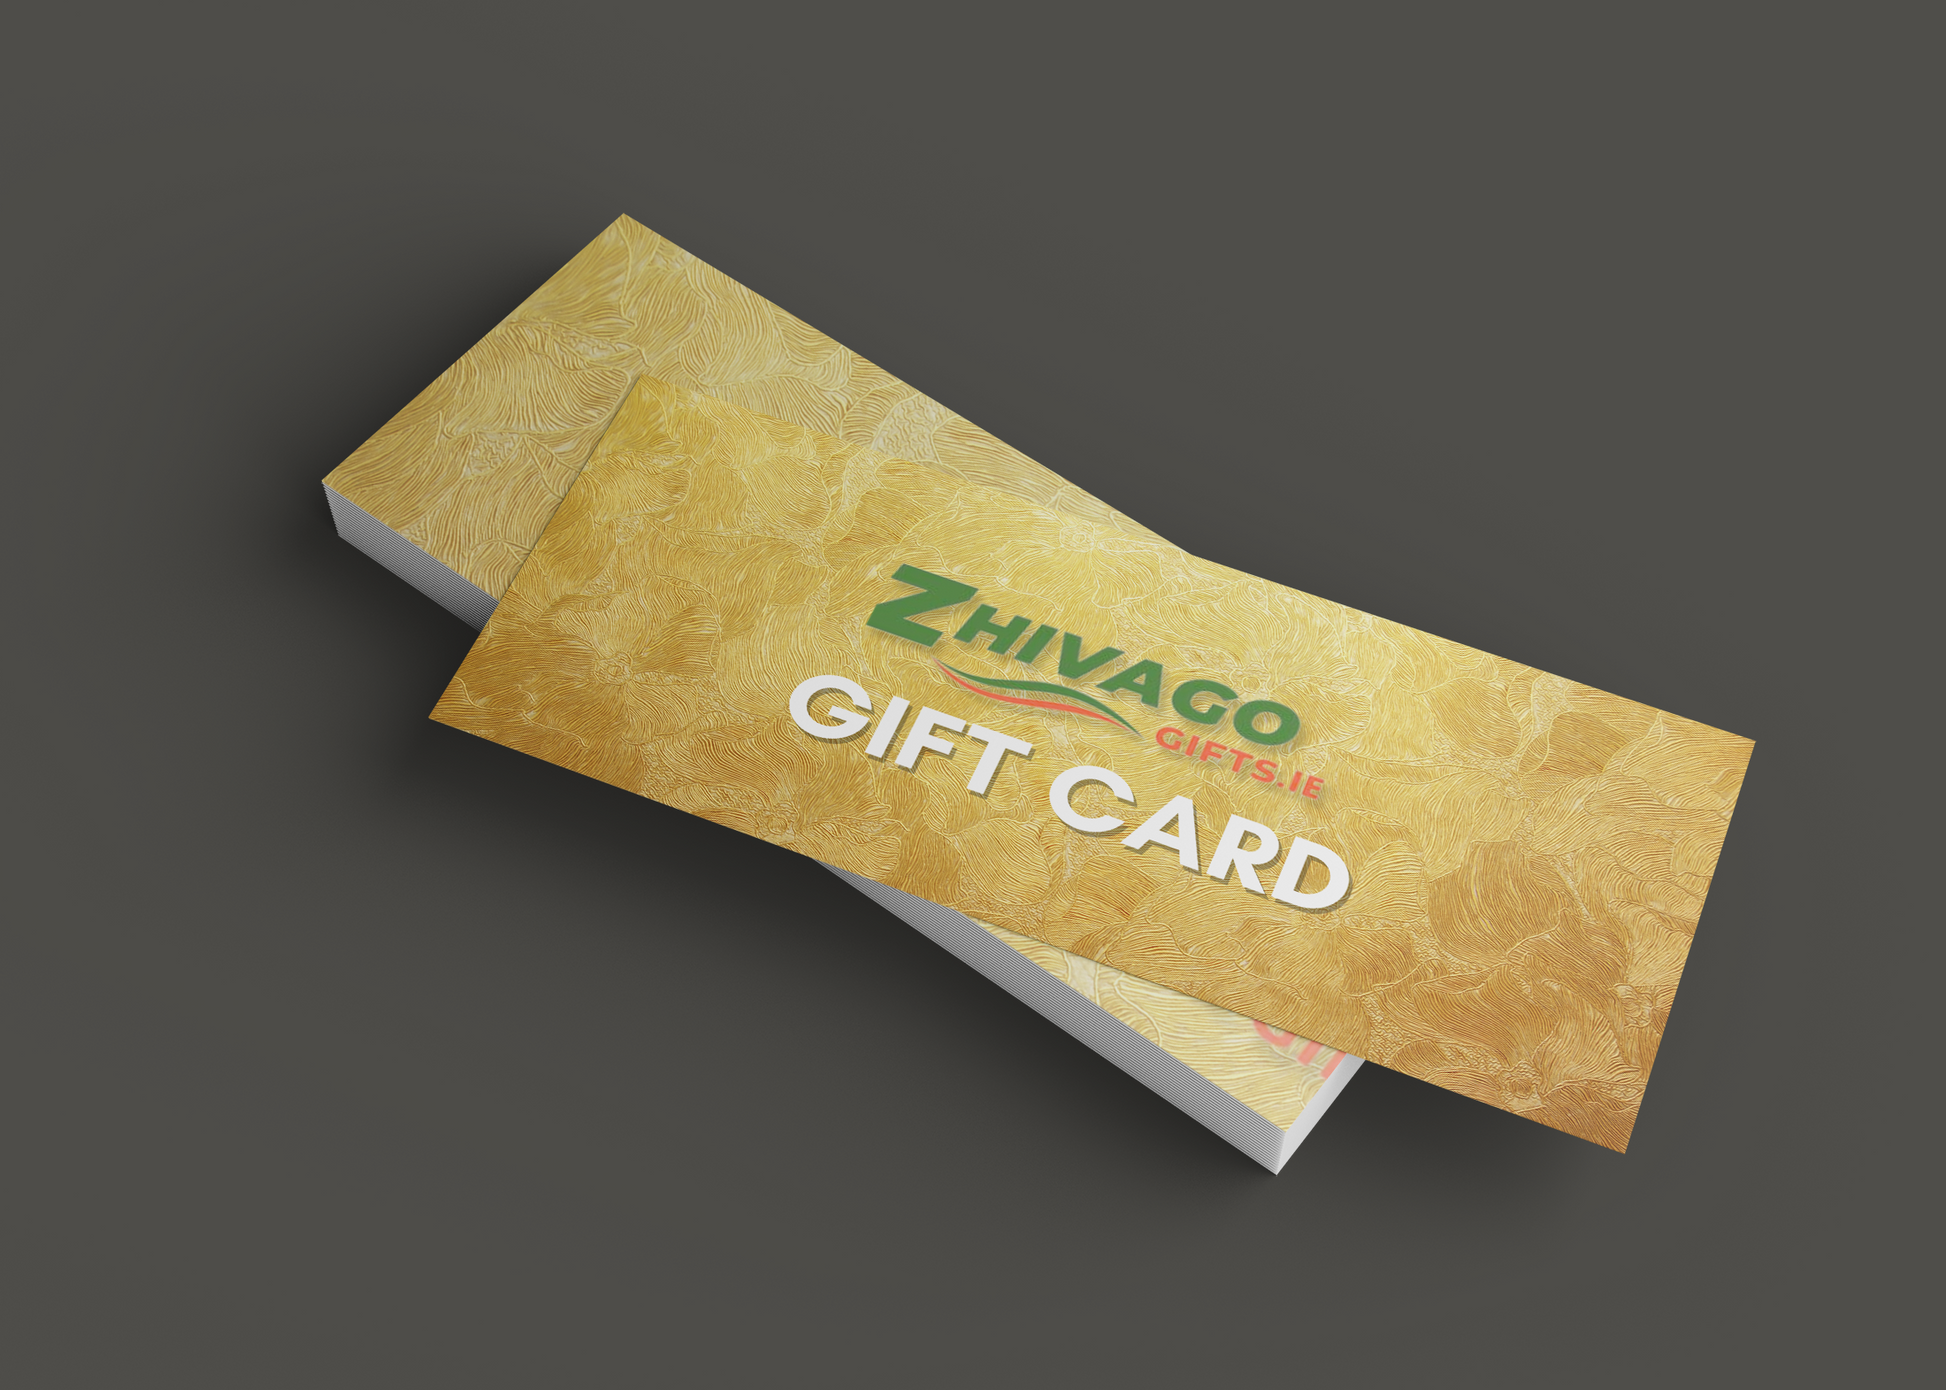 Zhivago Gifts Gift Card - Zhivago Gifts